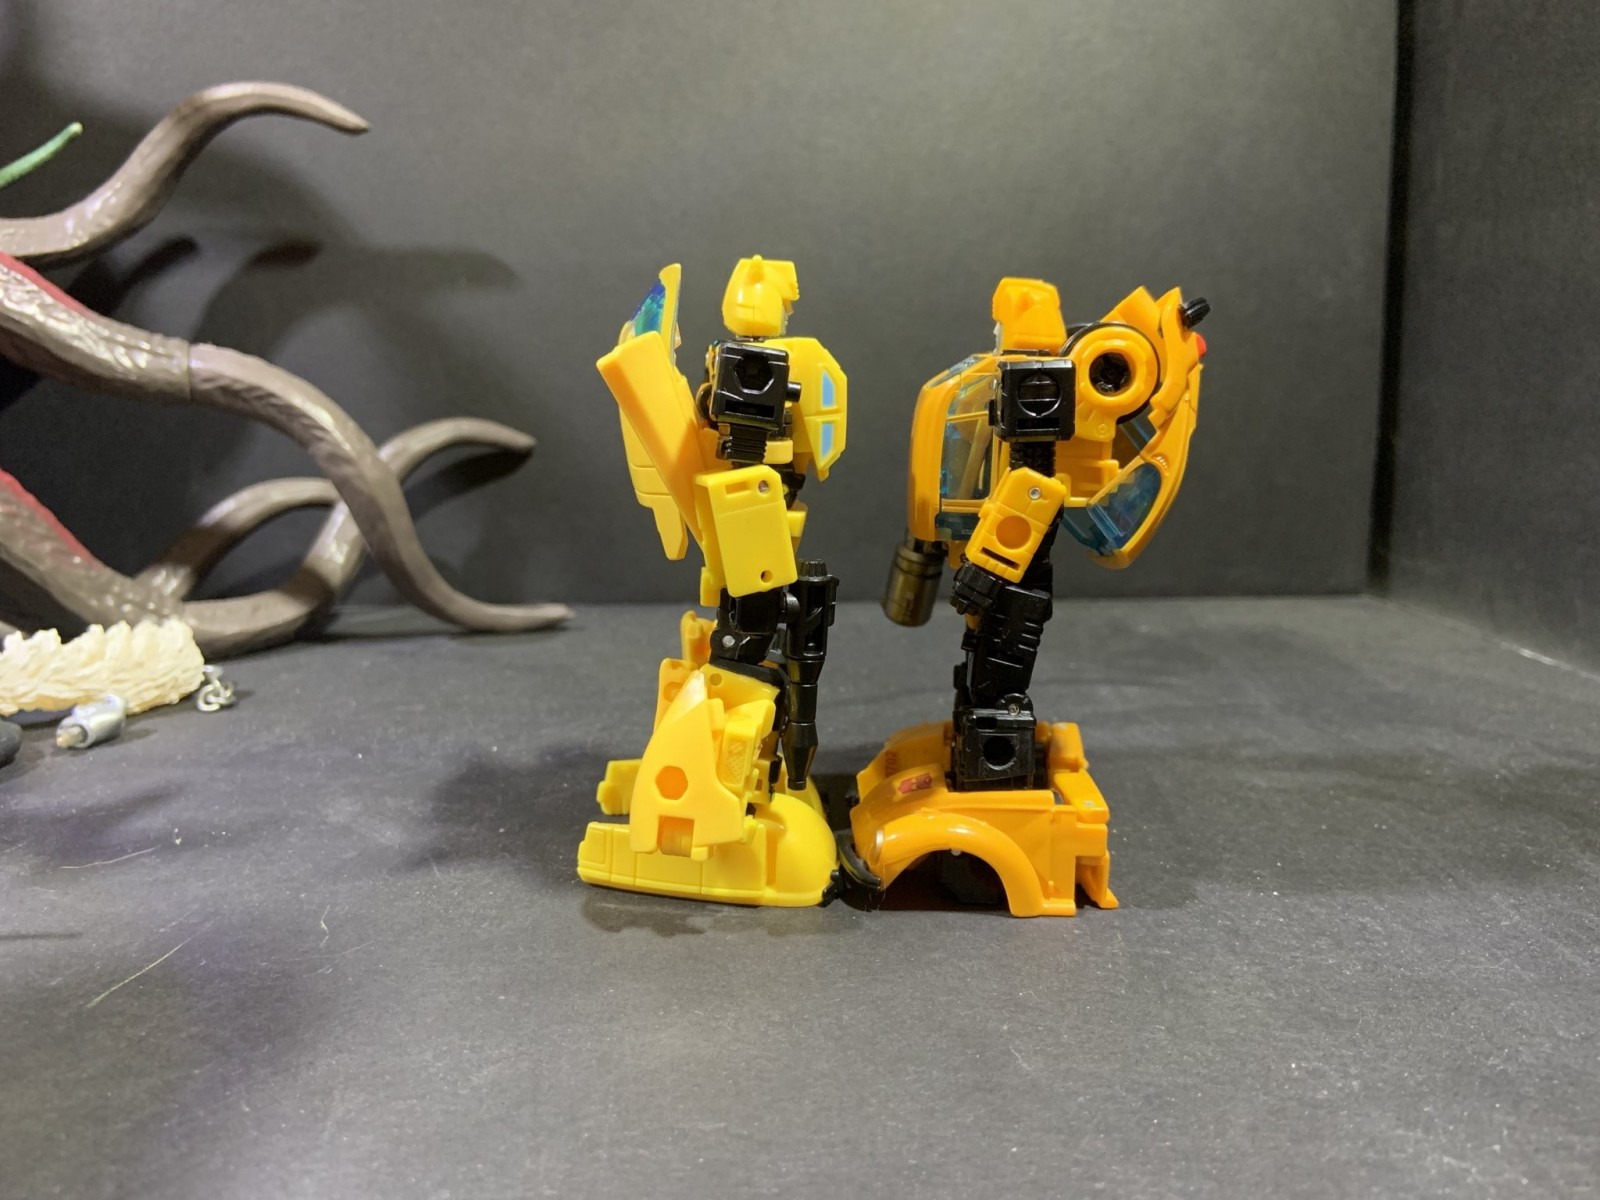 Transformer Origins: Bumblebee